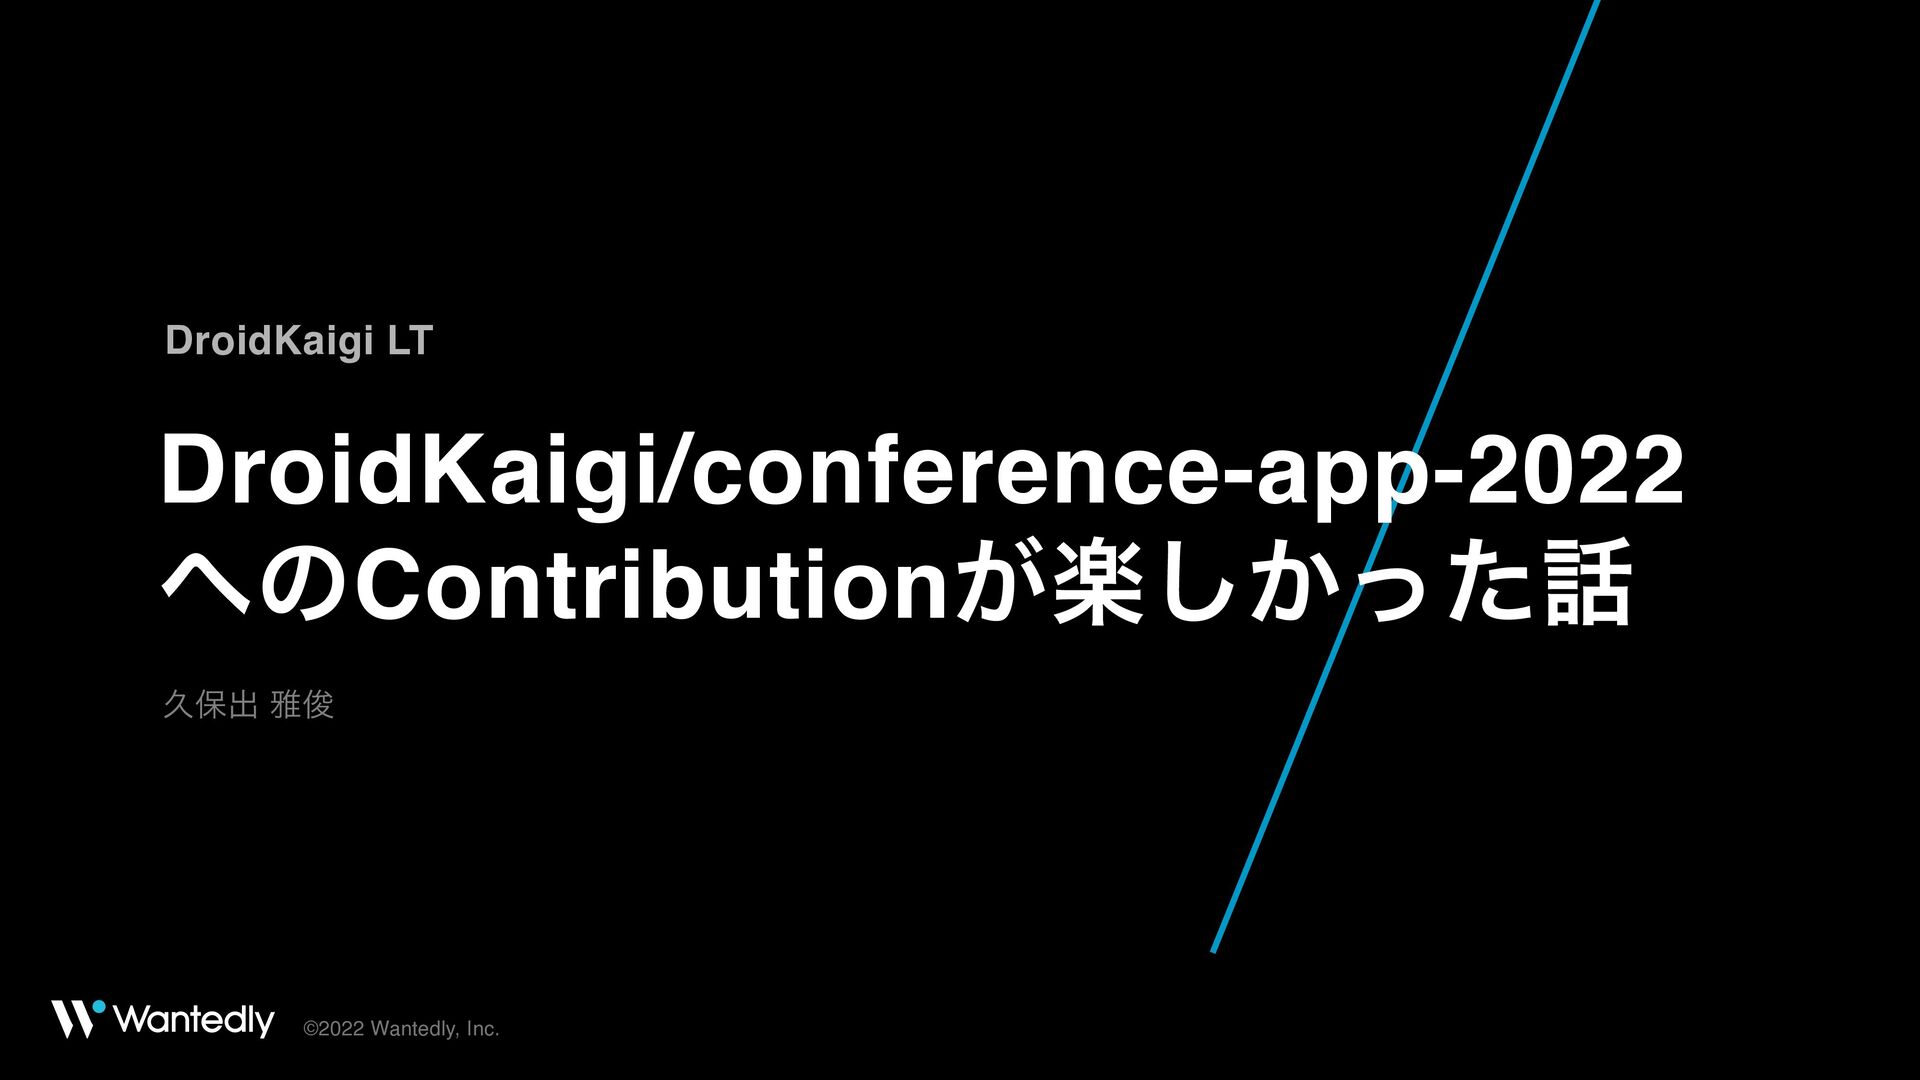 DroidKaigi/conference-app-2022へのContributionが楽しかった話 / Contributing DroidKaigi app was fun!